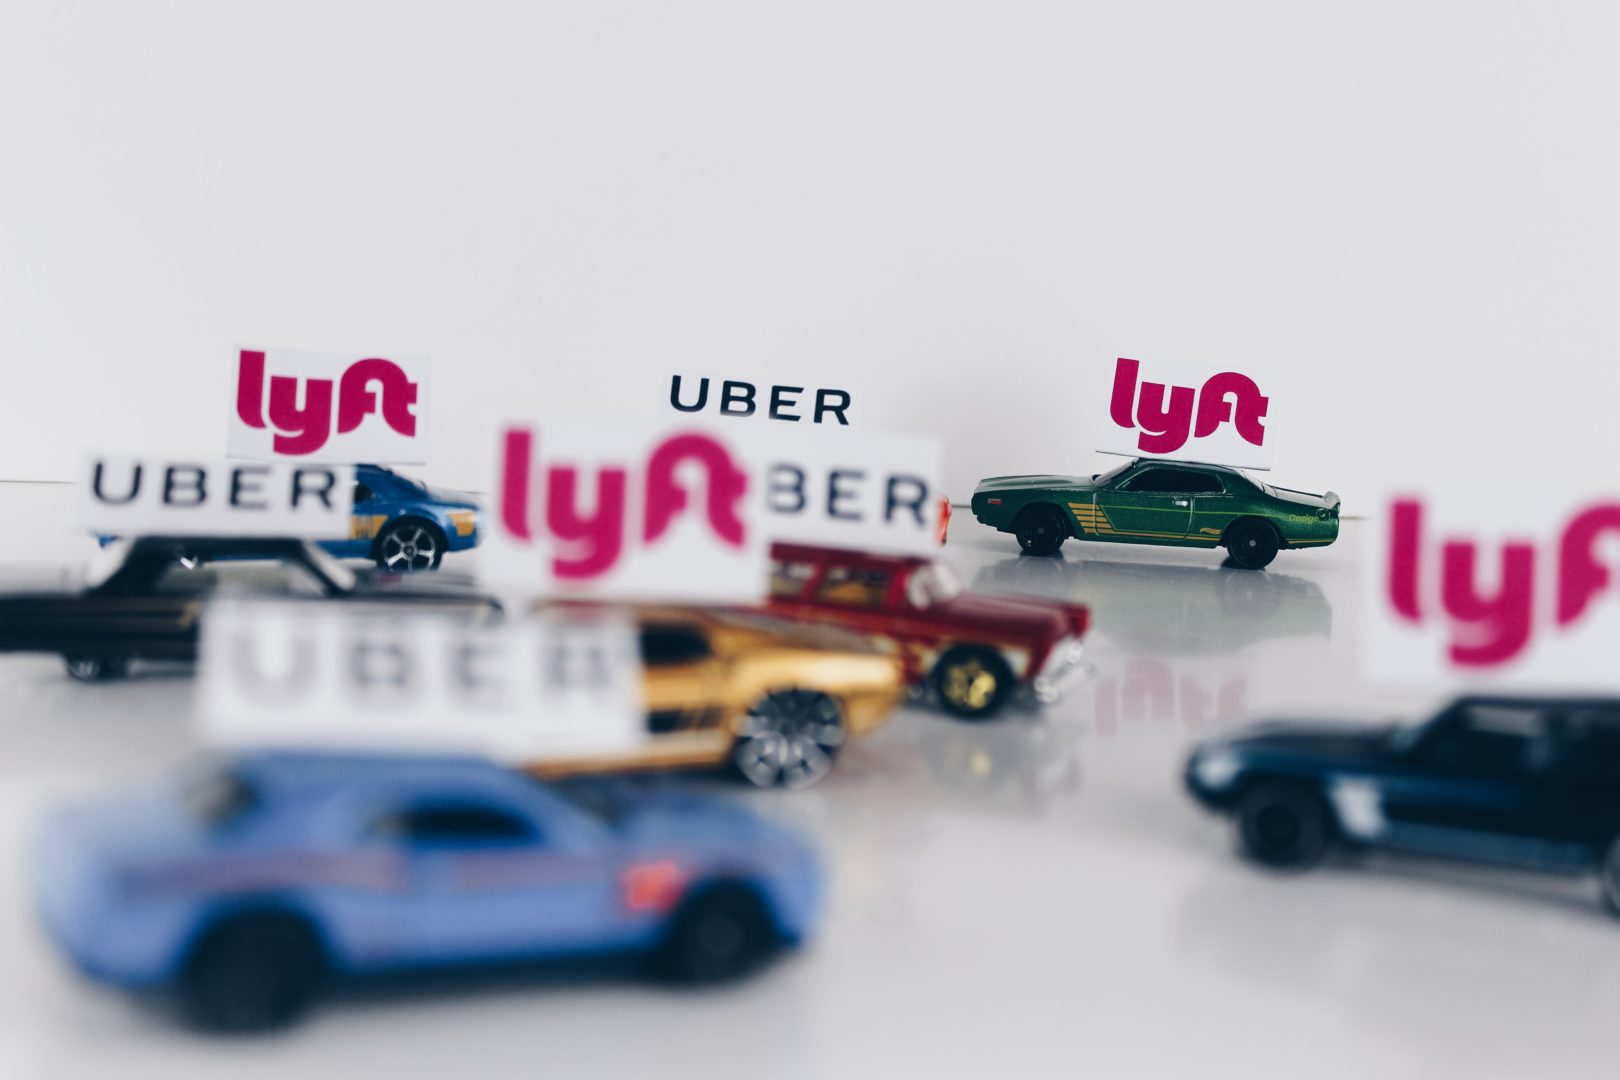 Uber-Lyft